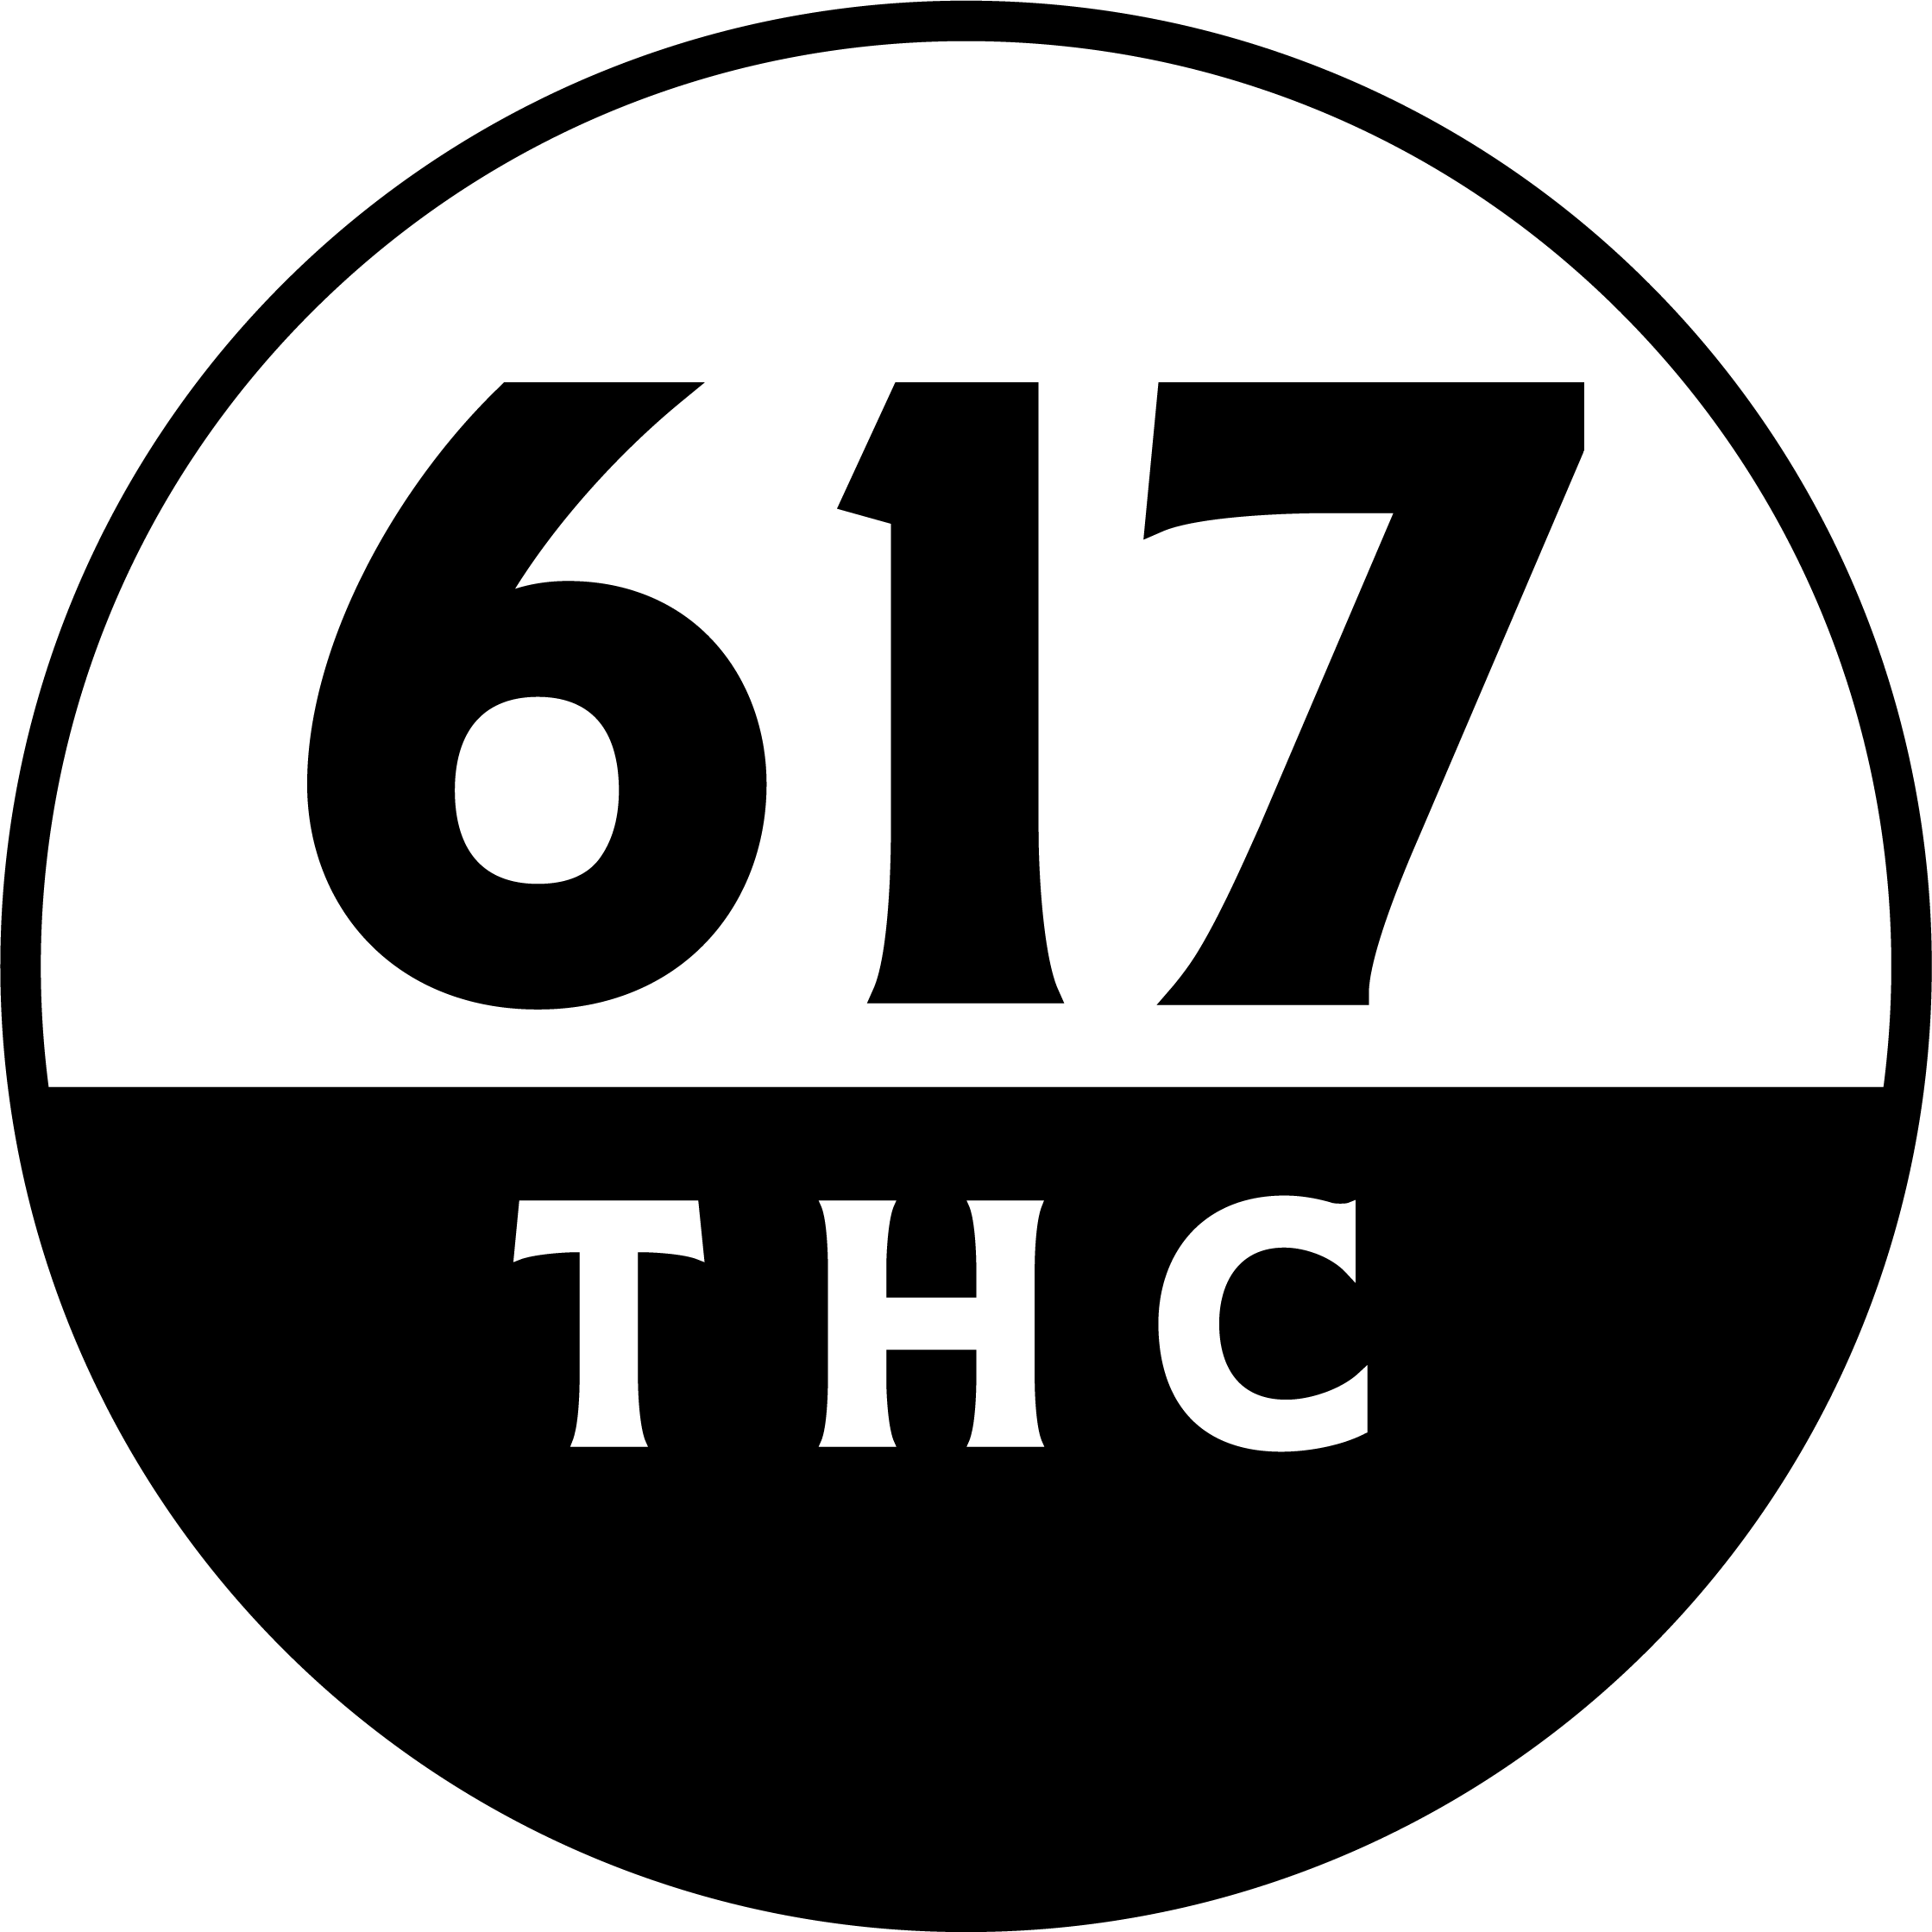 617 THC (Rec) logo